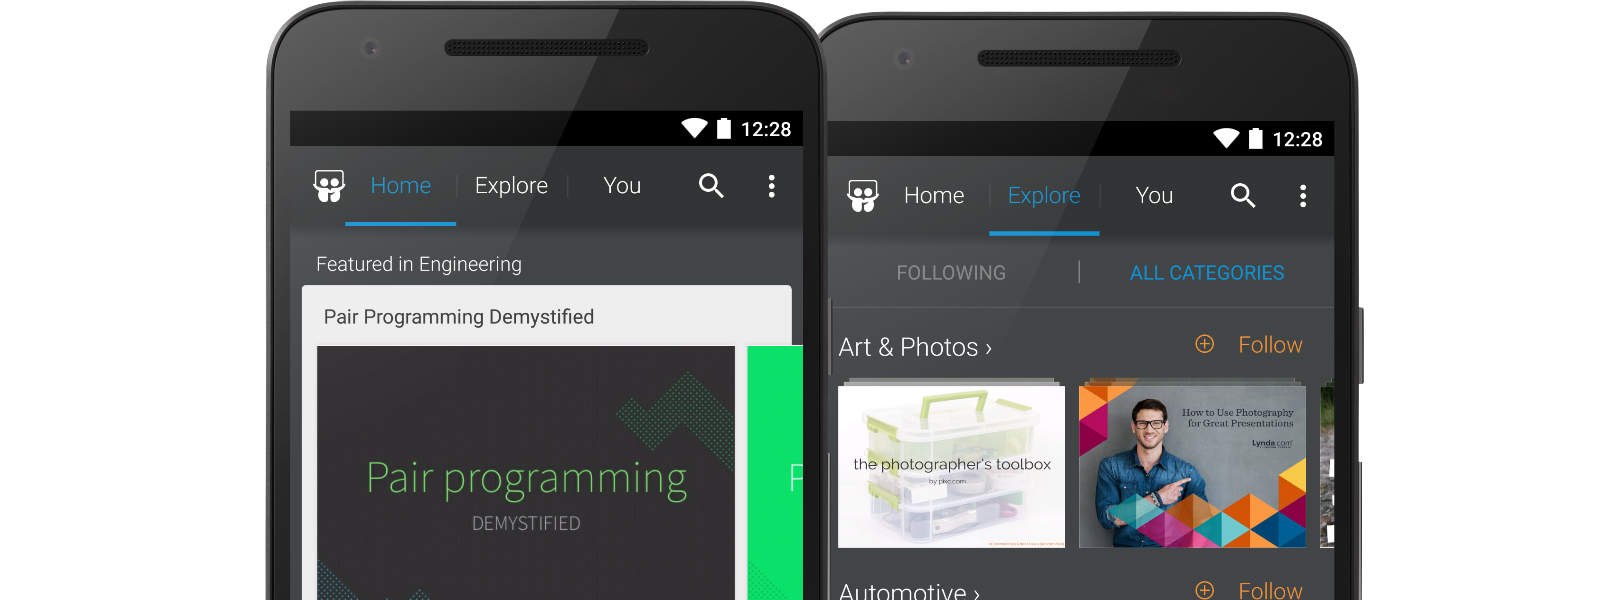 Slideshare for Android